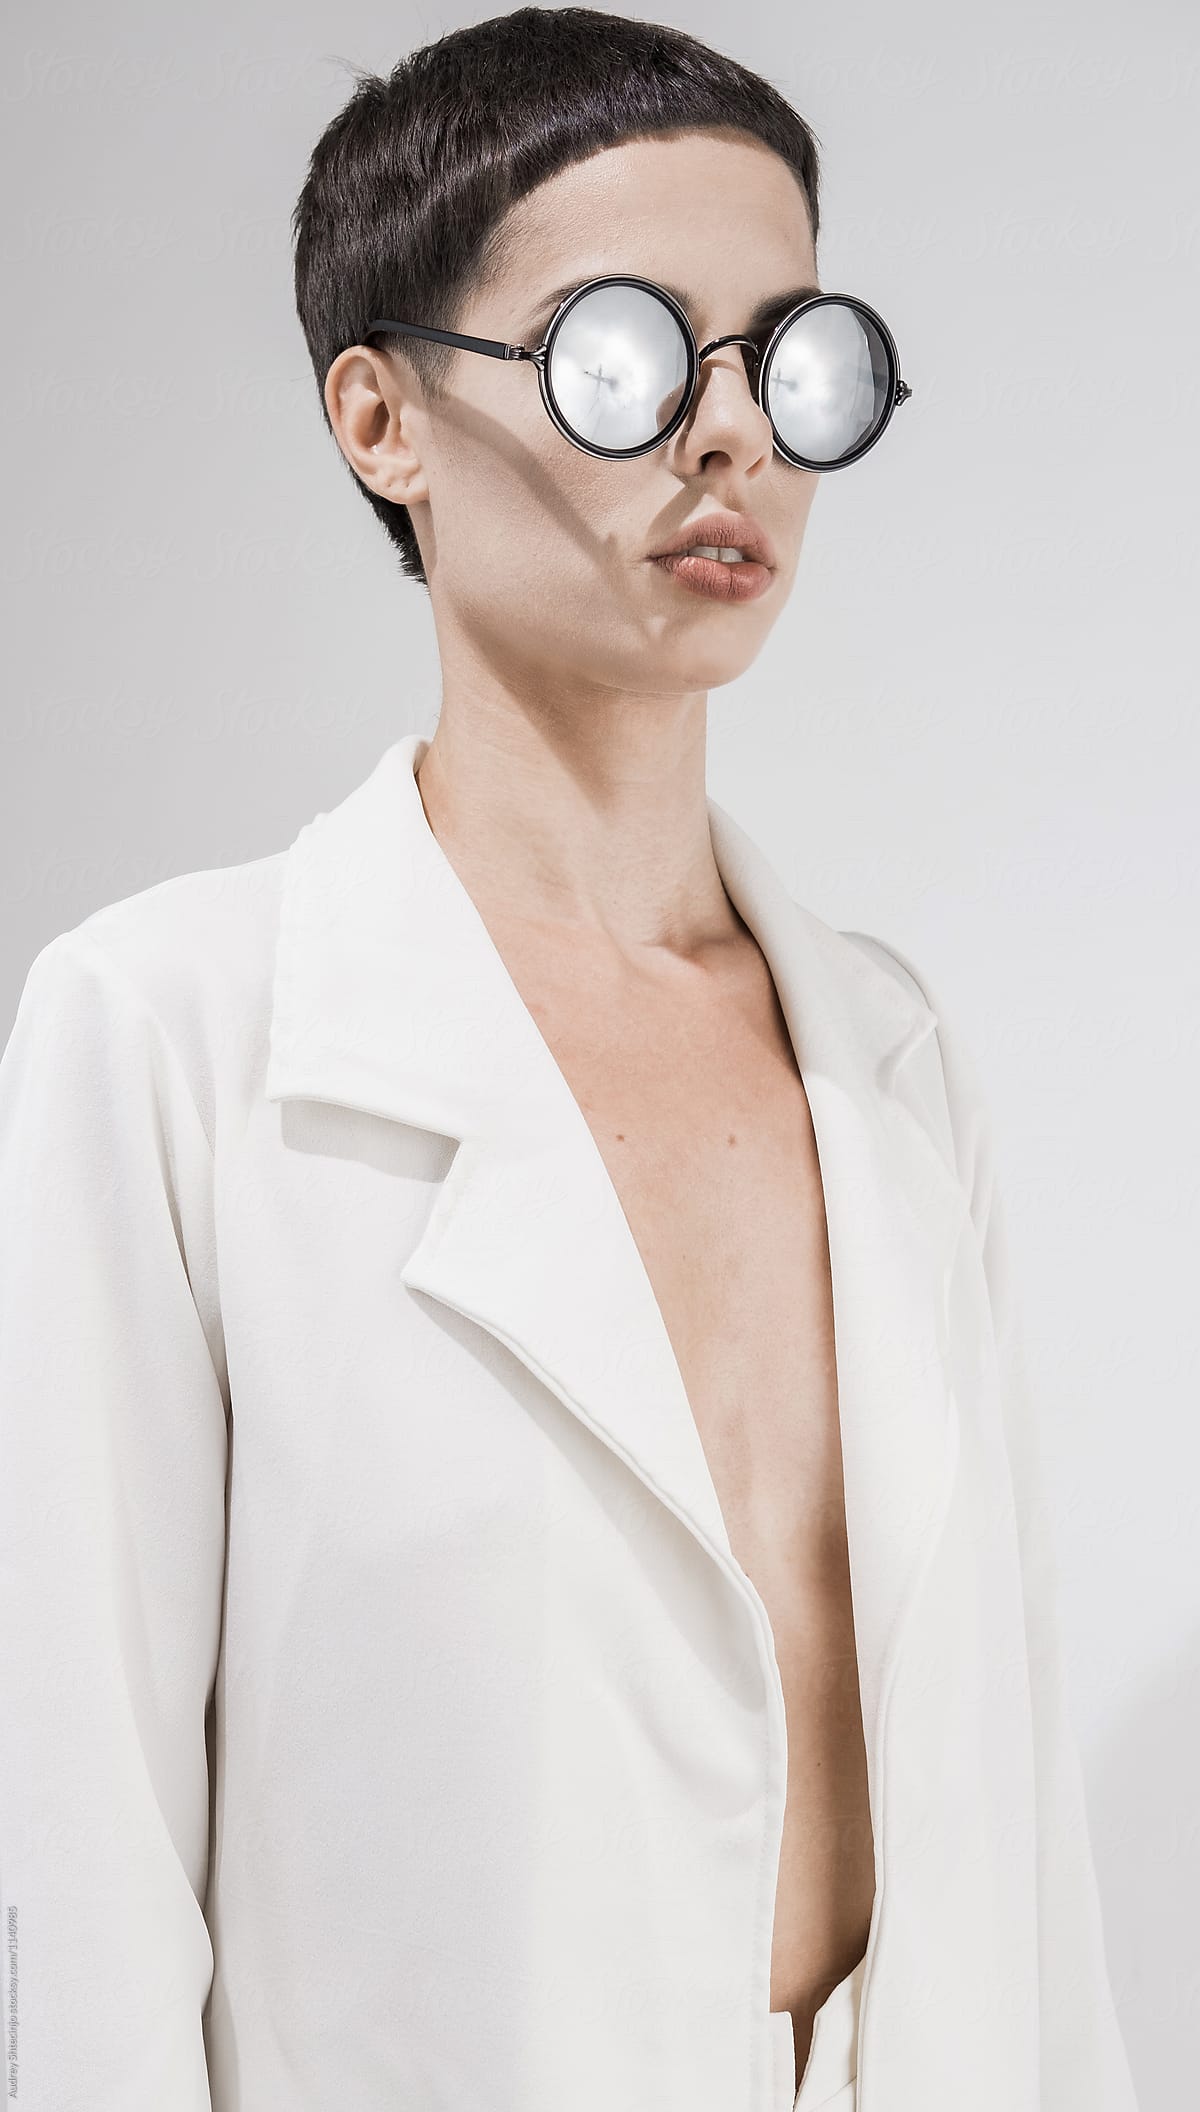 Minimalist fashionable portrait of female model with sunglasses.